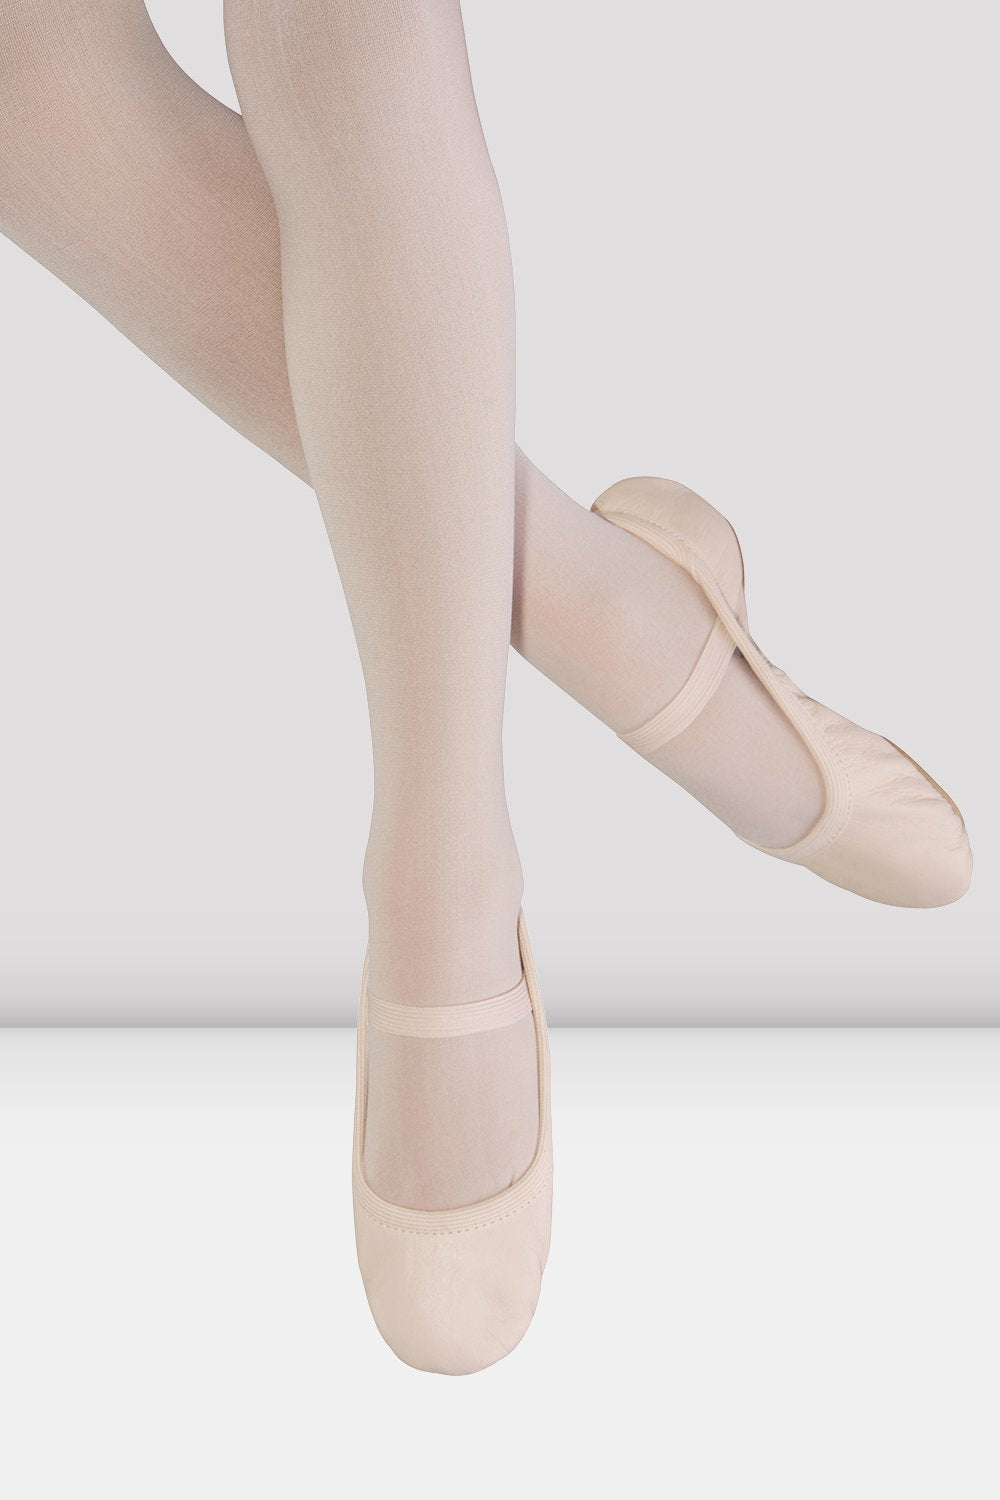 BLOCH - SO249G - Giselle tie) Girls Leather Ballet - DanceLine